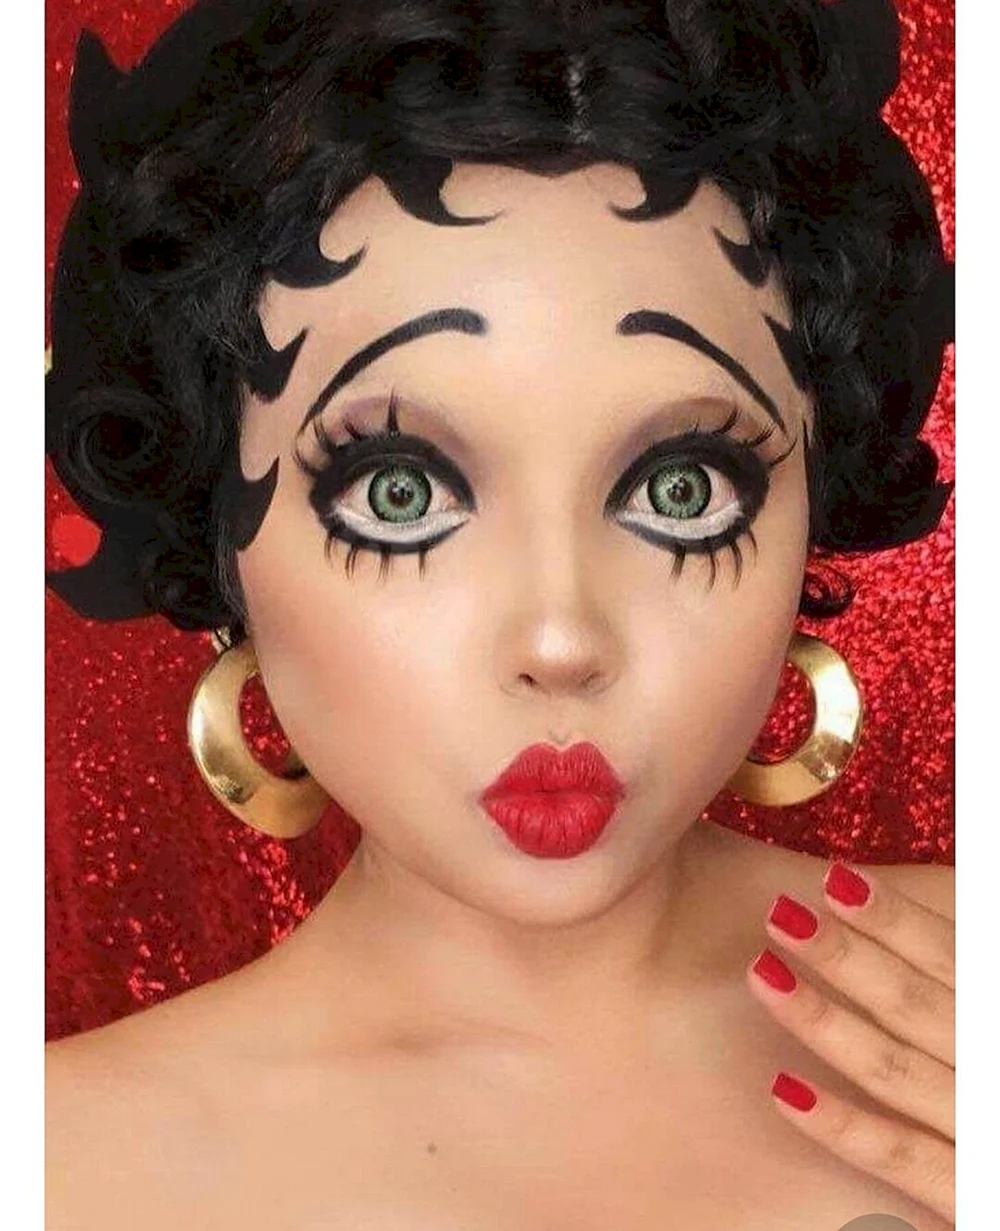 Betty Boop Makeup